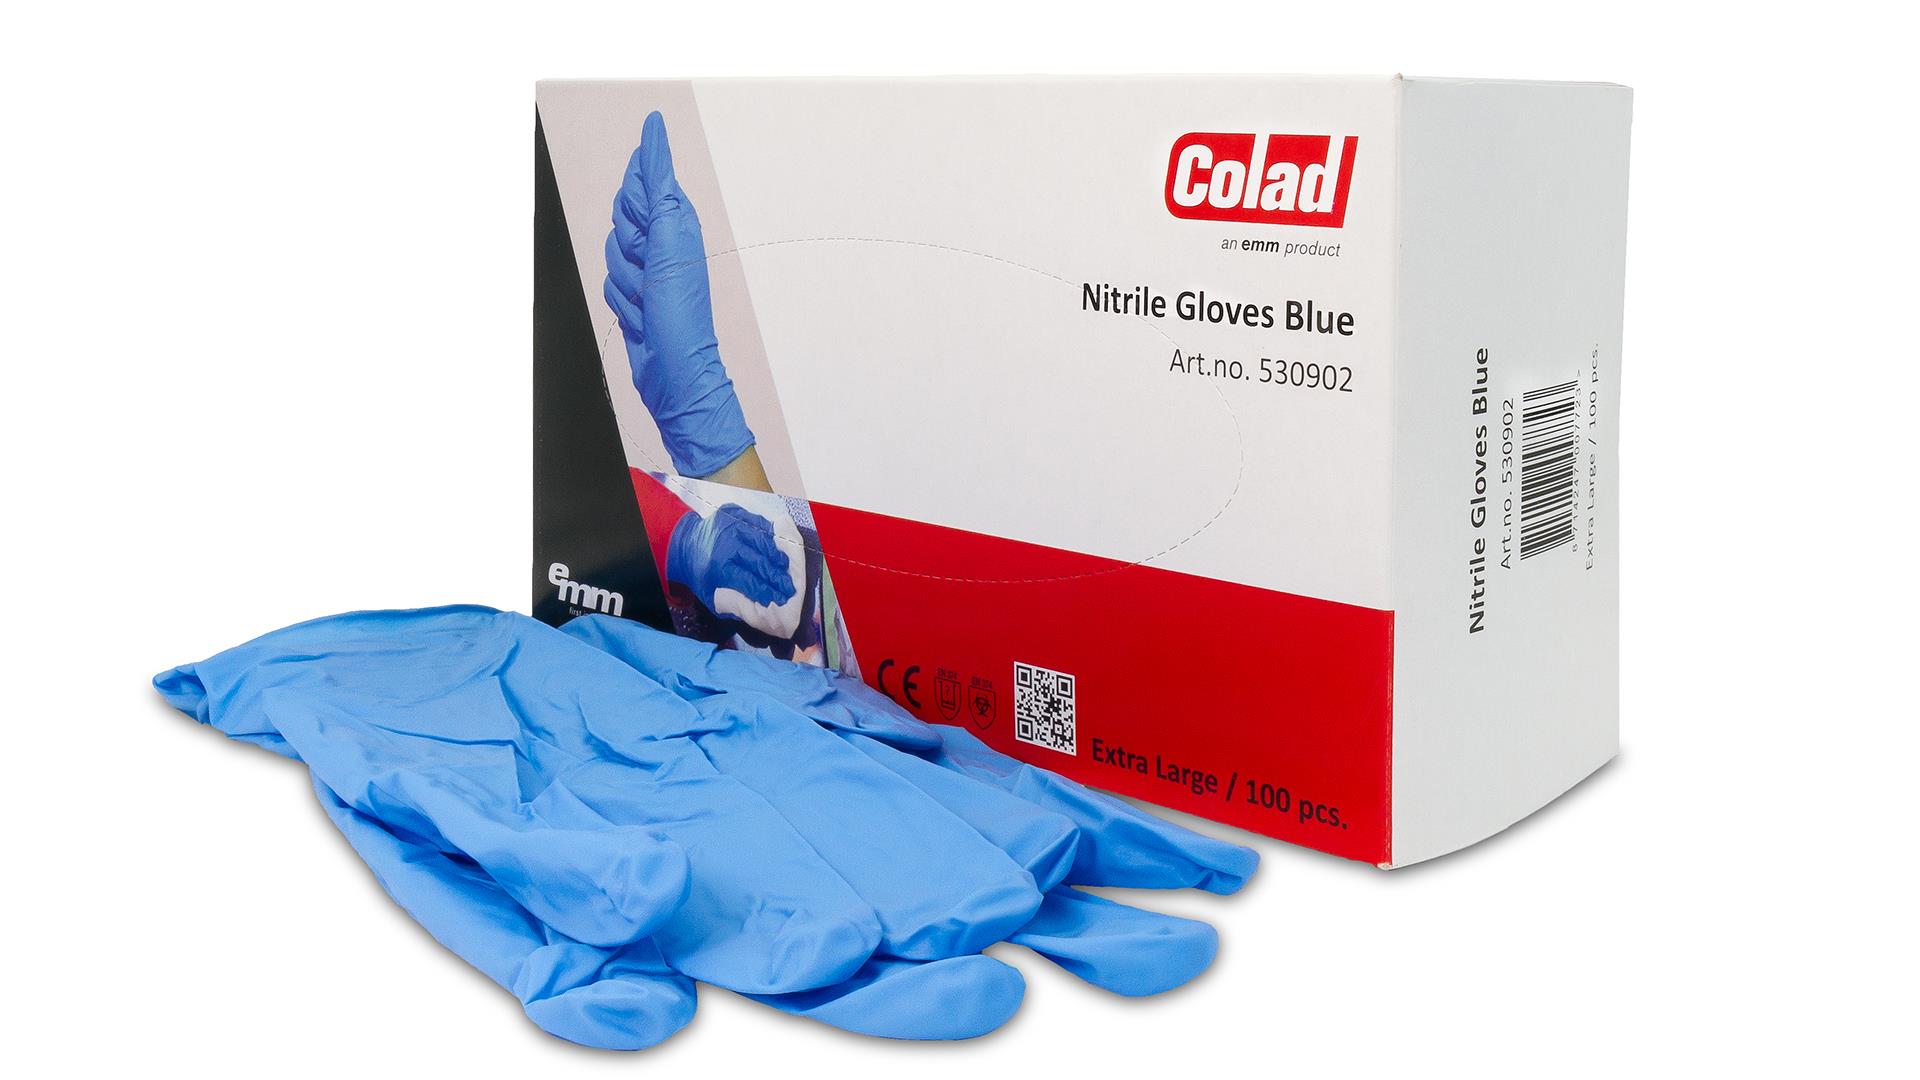 EMM Colad Einweg Nitril Handschuhe blau XL (100 Stück)